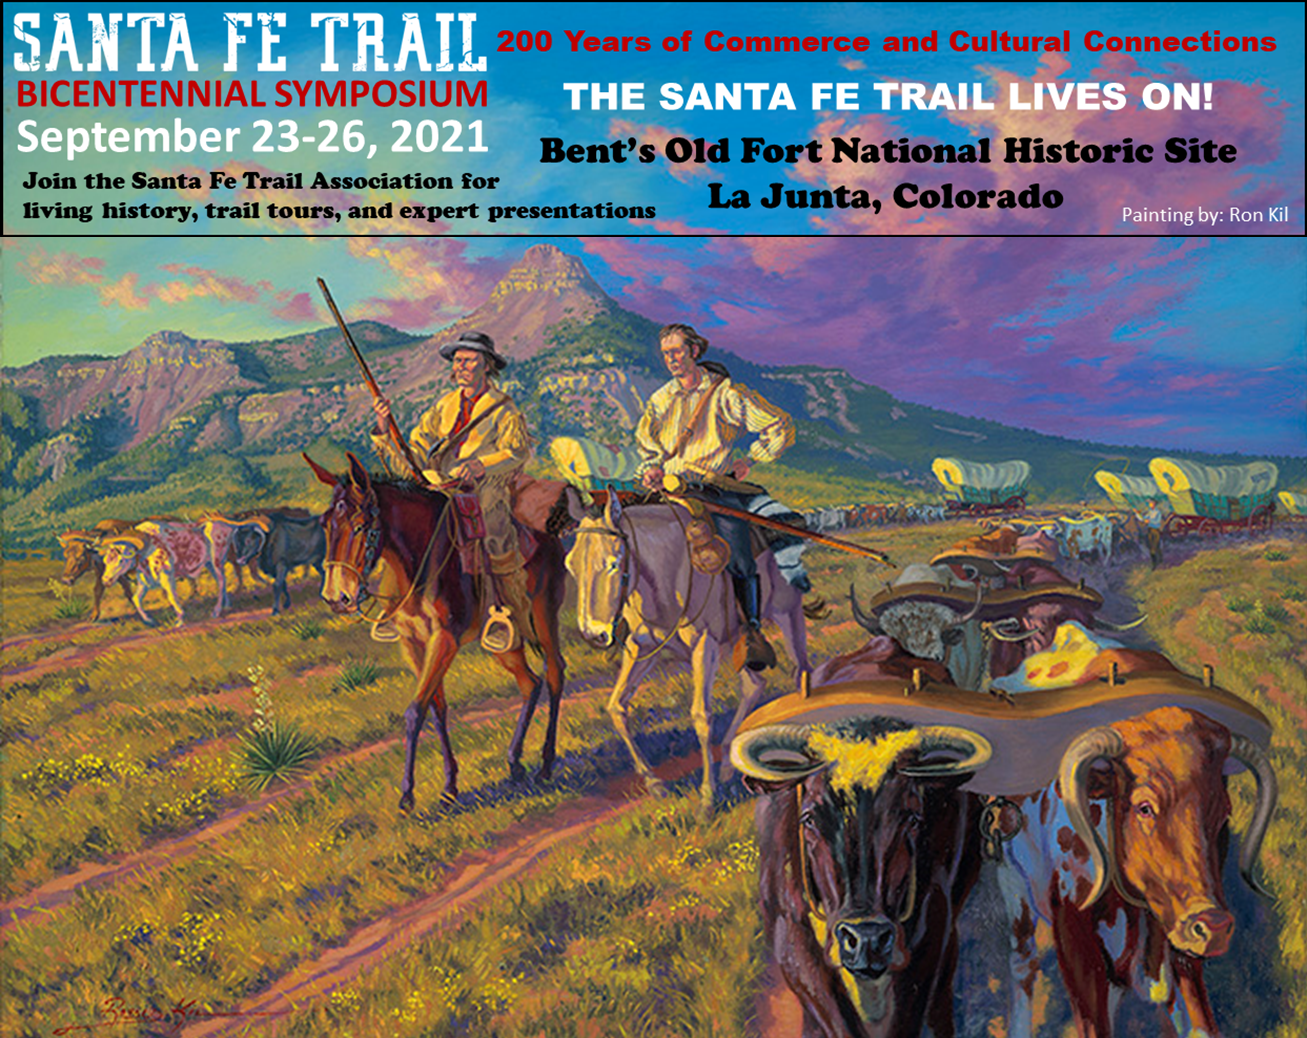 Santa Fe Trail Association Bicentennial Symposium SECO News seconews.org